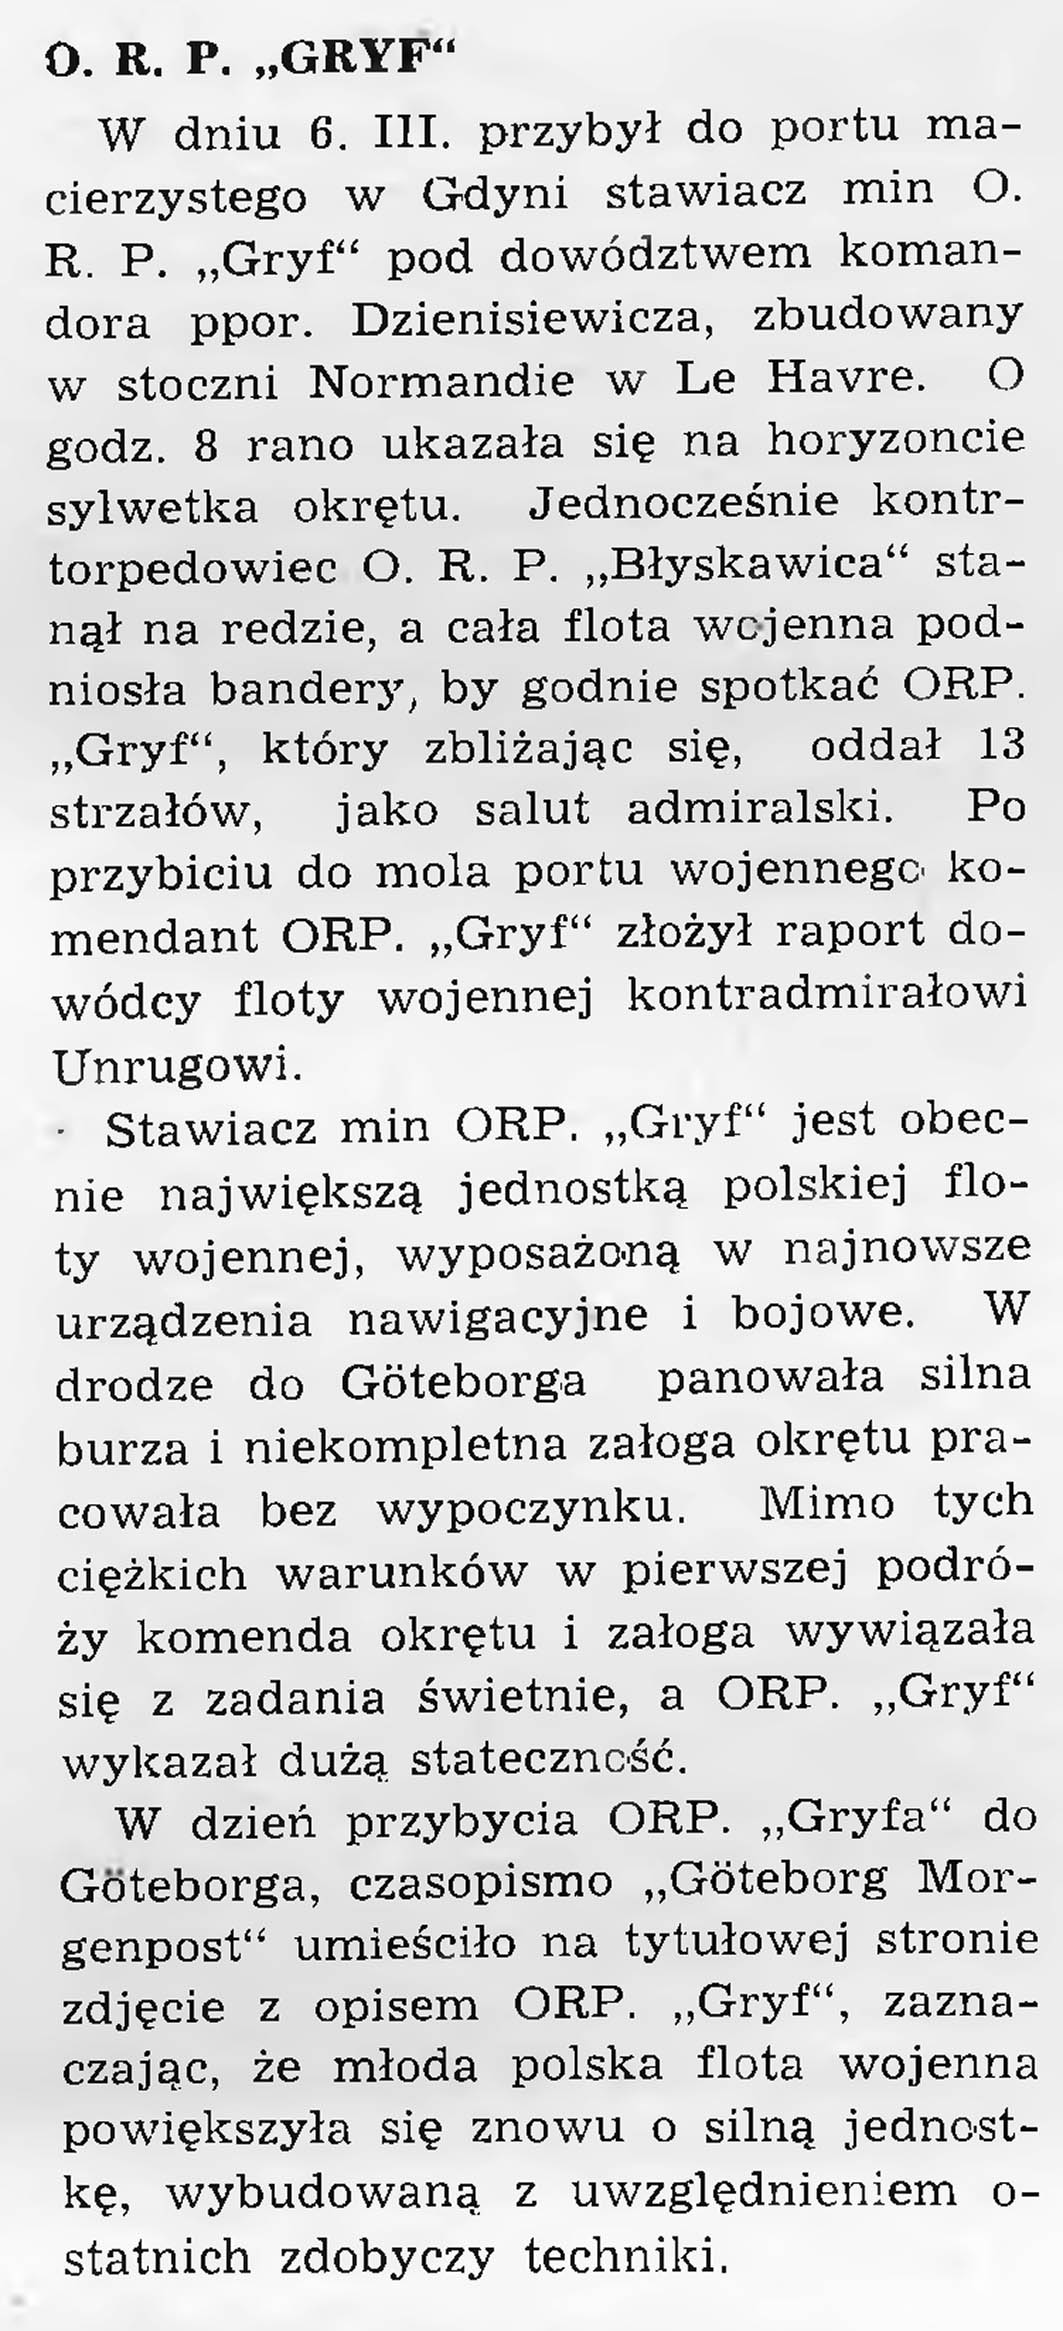 O. R. P. "Gryf" 